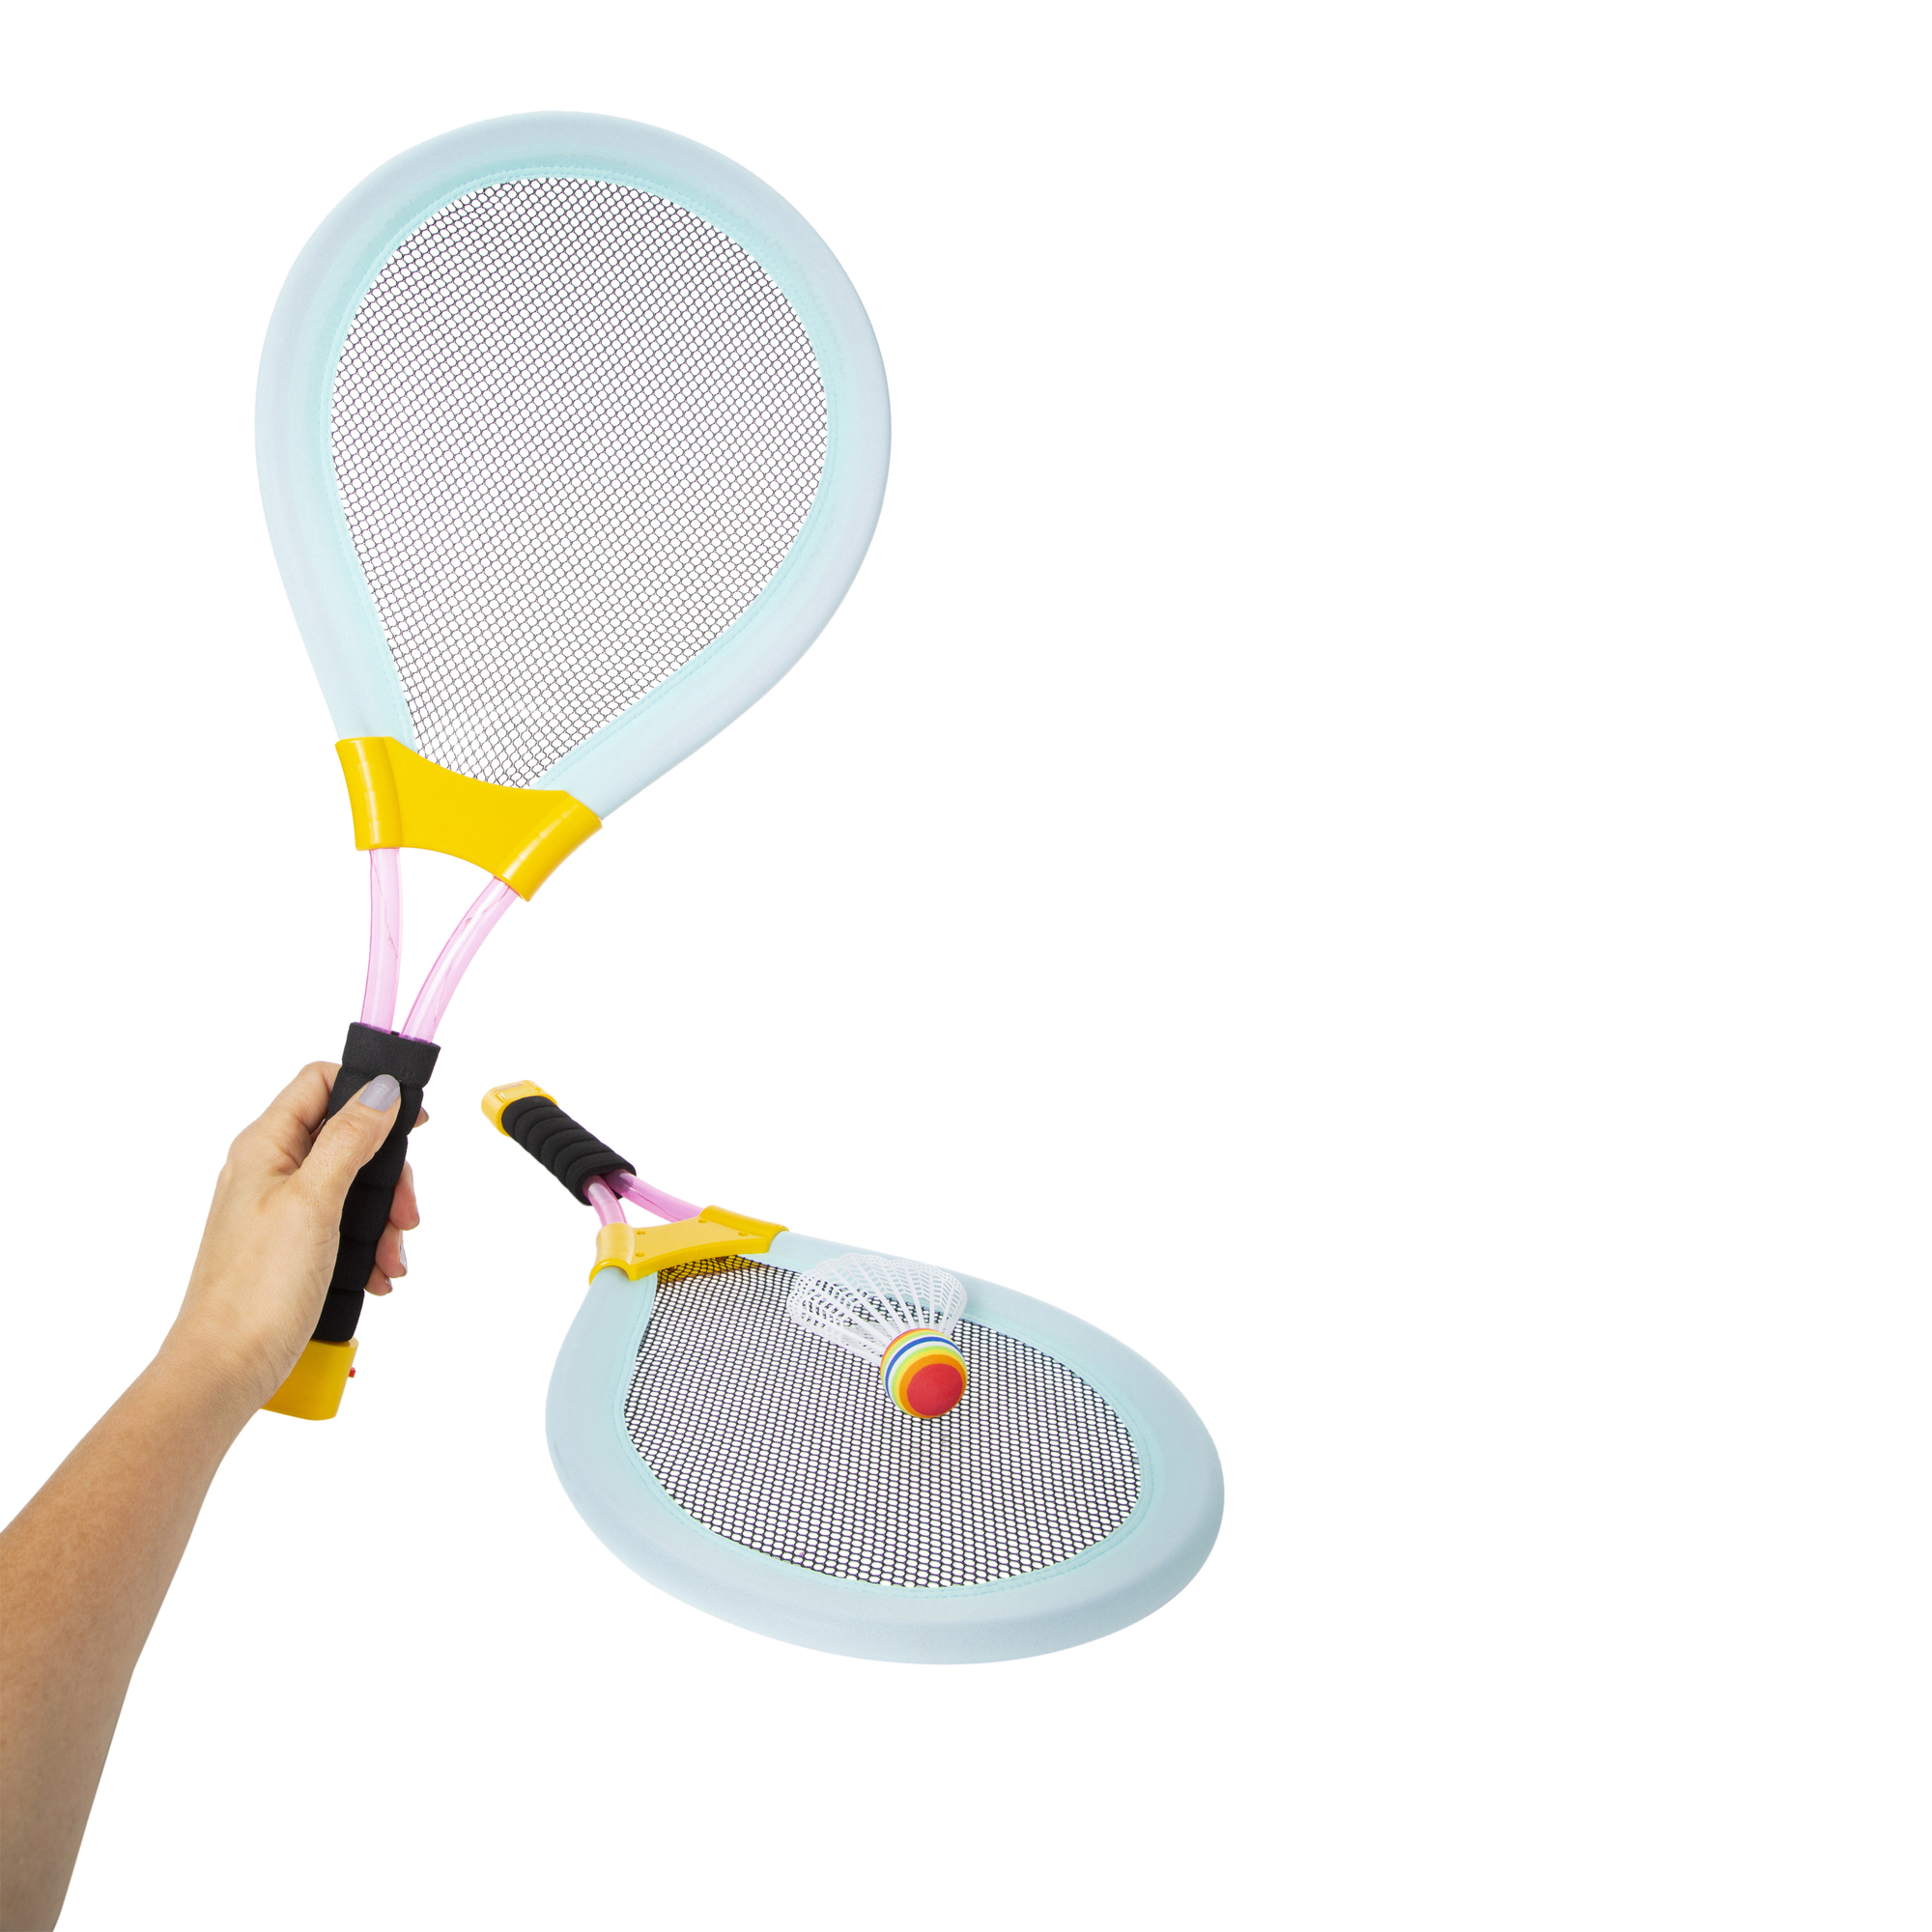 light-up badminton 3-piece set